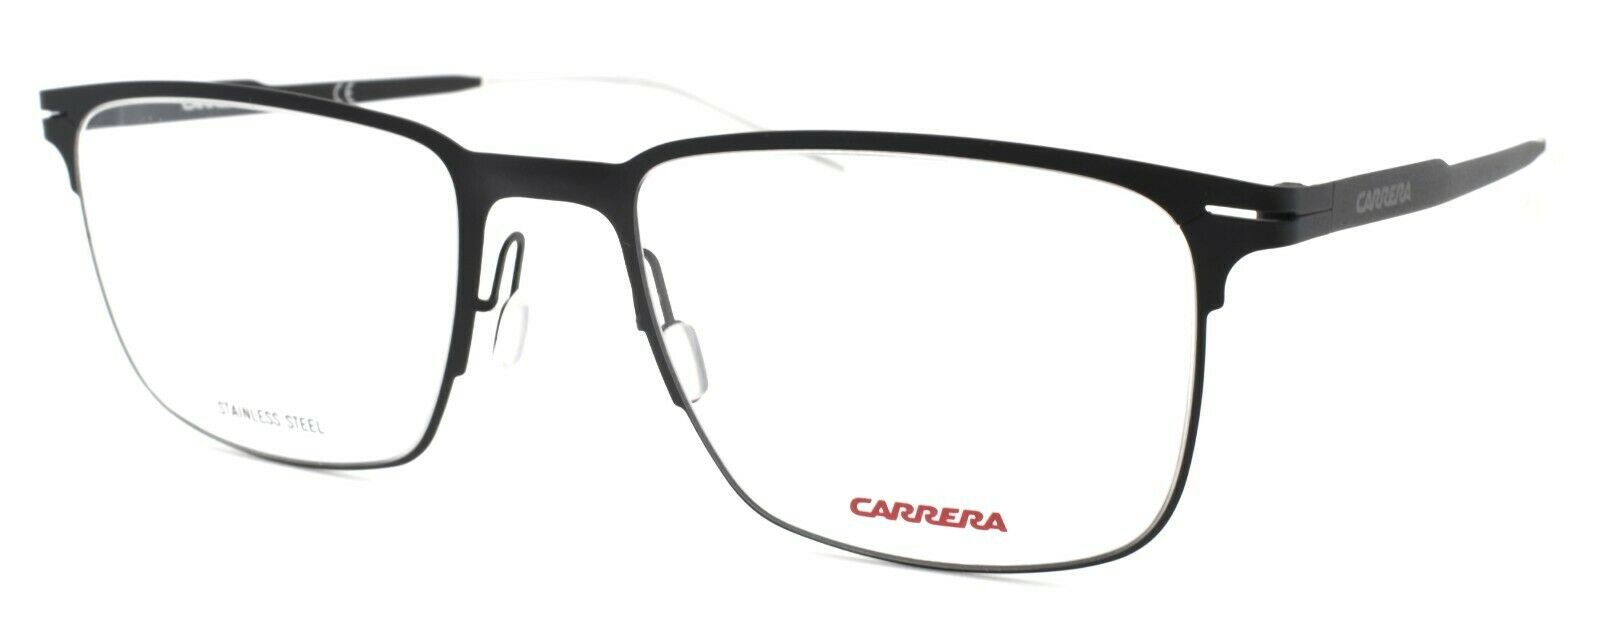 1-Carrera CA6661 003 Men's Eyeglasses Frames 52-20-145 Matte Black+ CASE-762753963338-IKSpecs